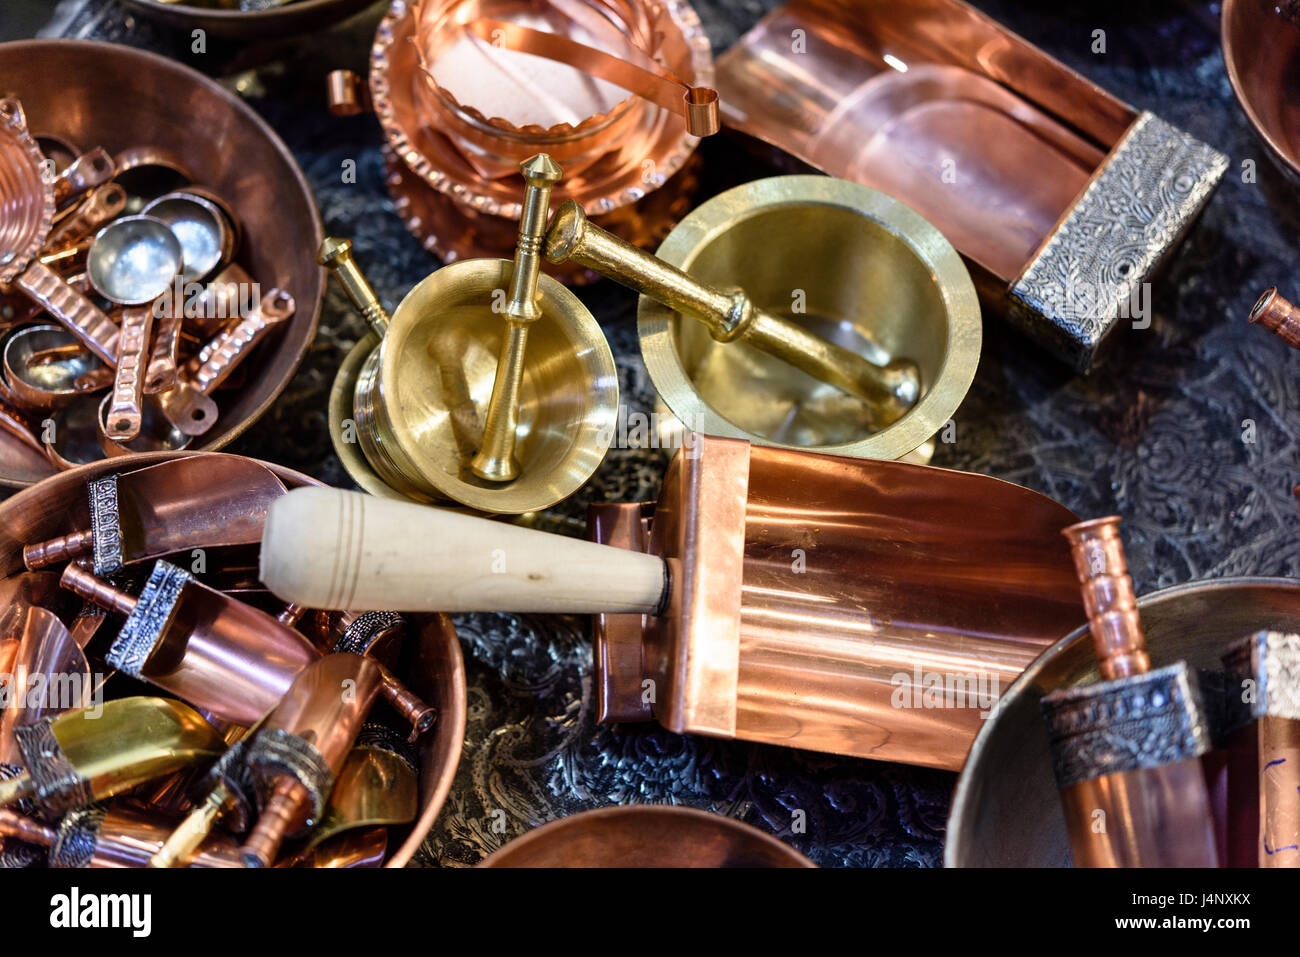 Handmade copper kitchen tools Stock Photo